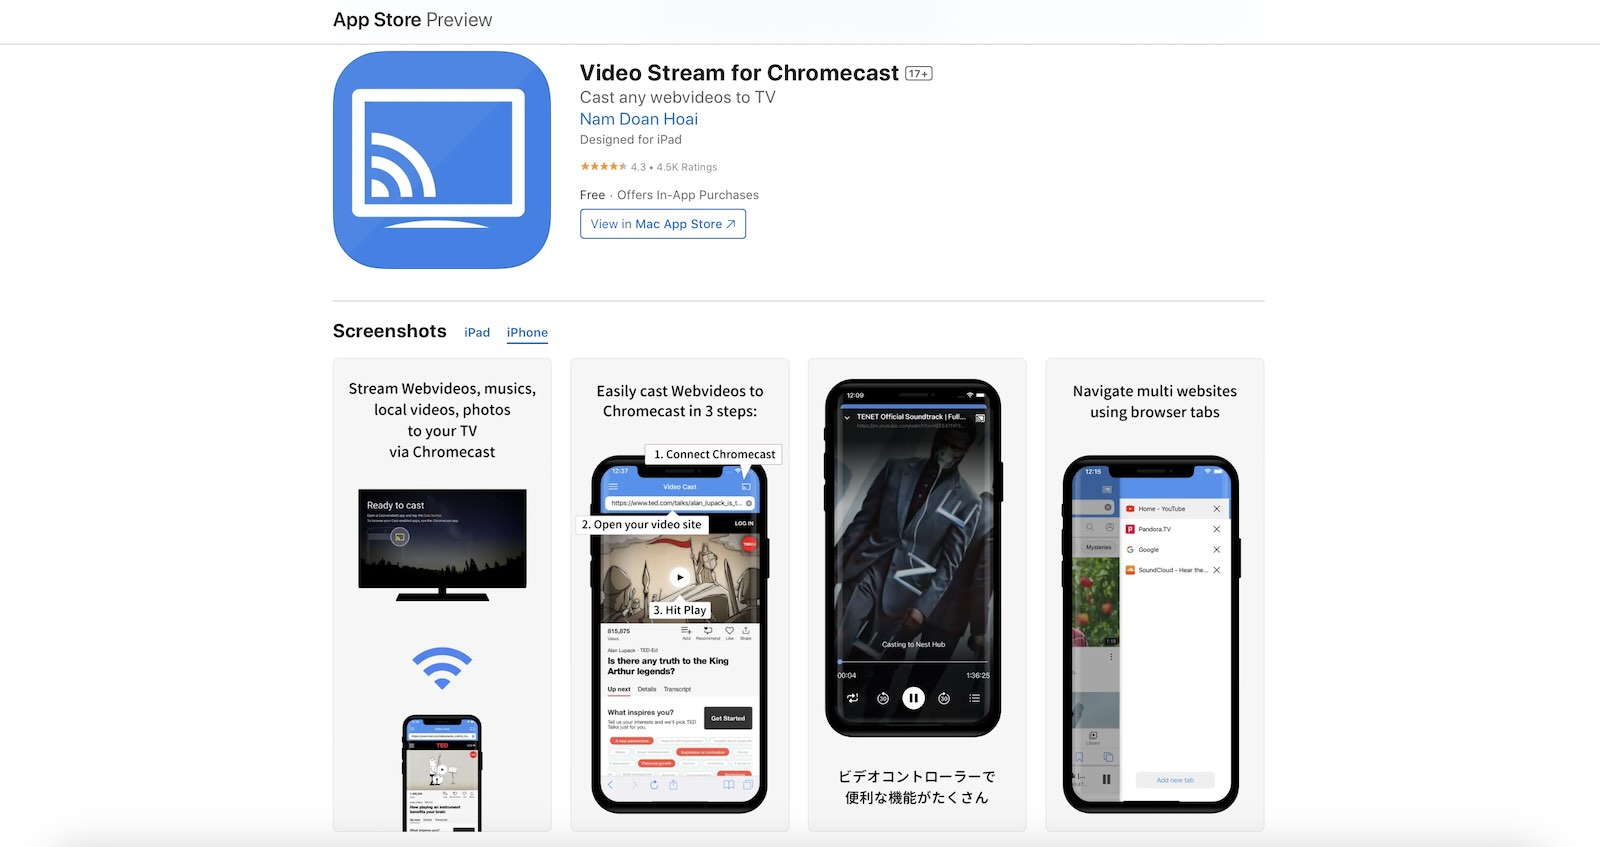 Video Stream for Chromecast in the App Store